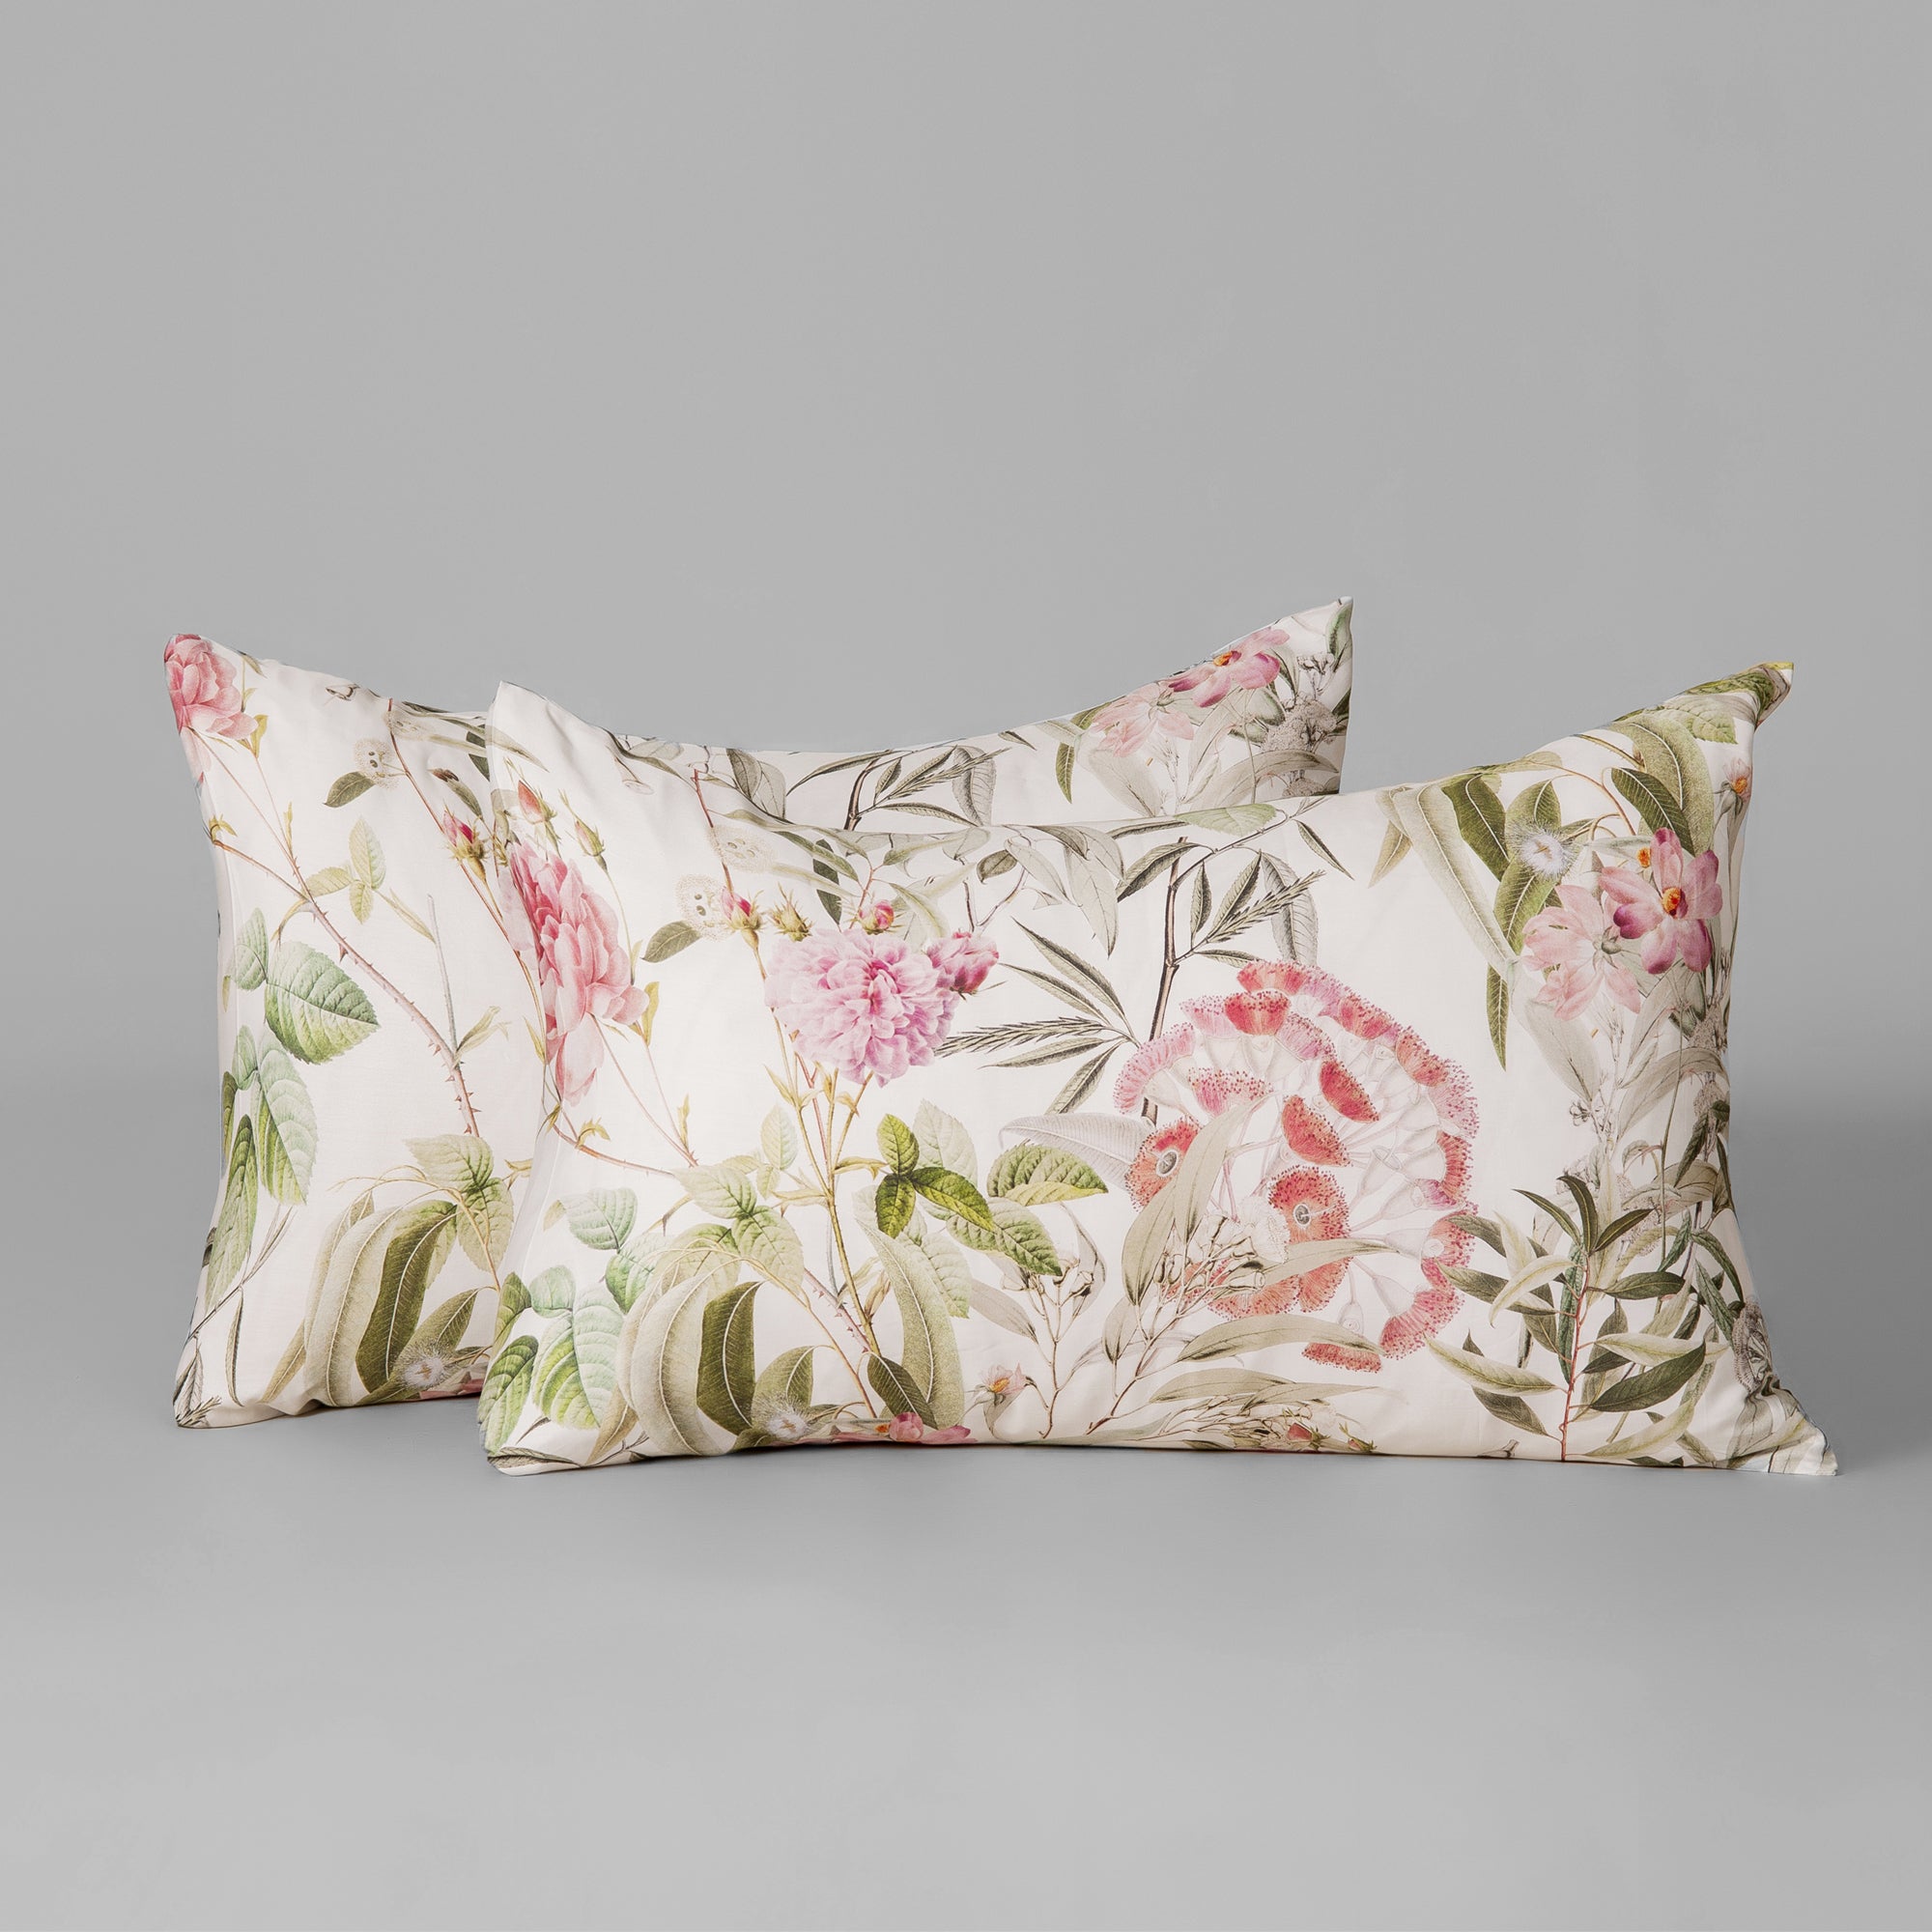 The Linen Company Bedding Spring Bloom Duvet Cover Set